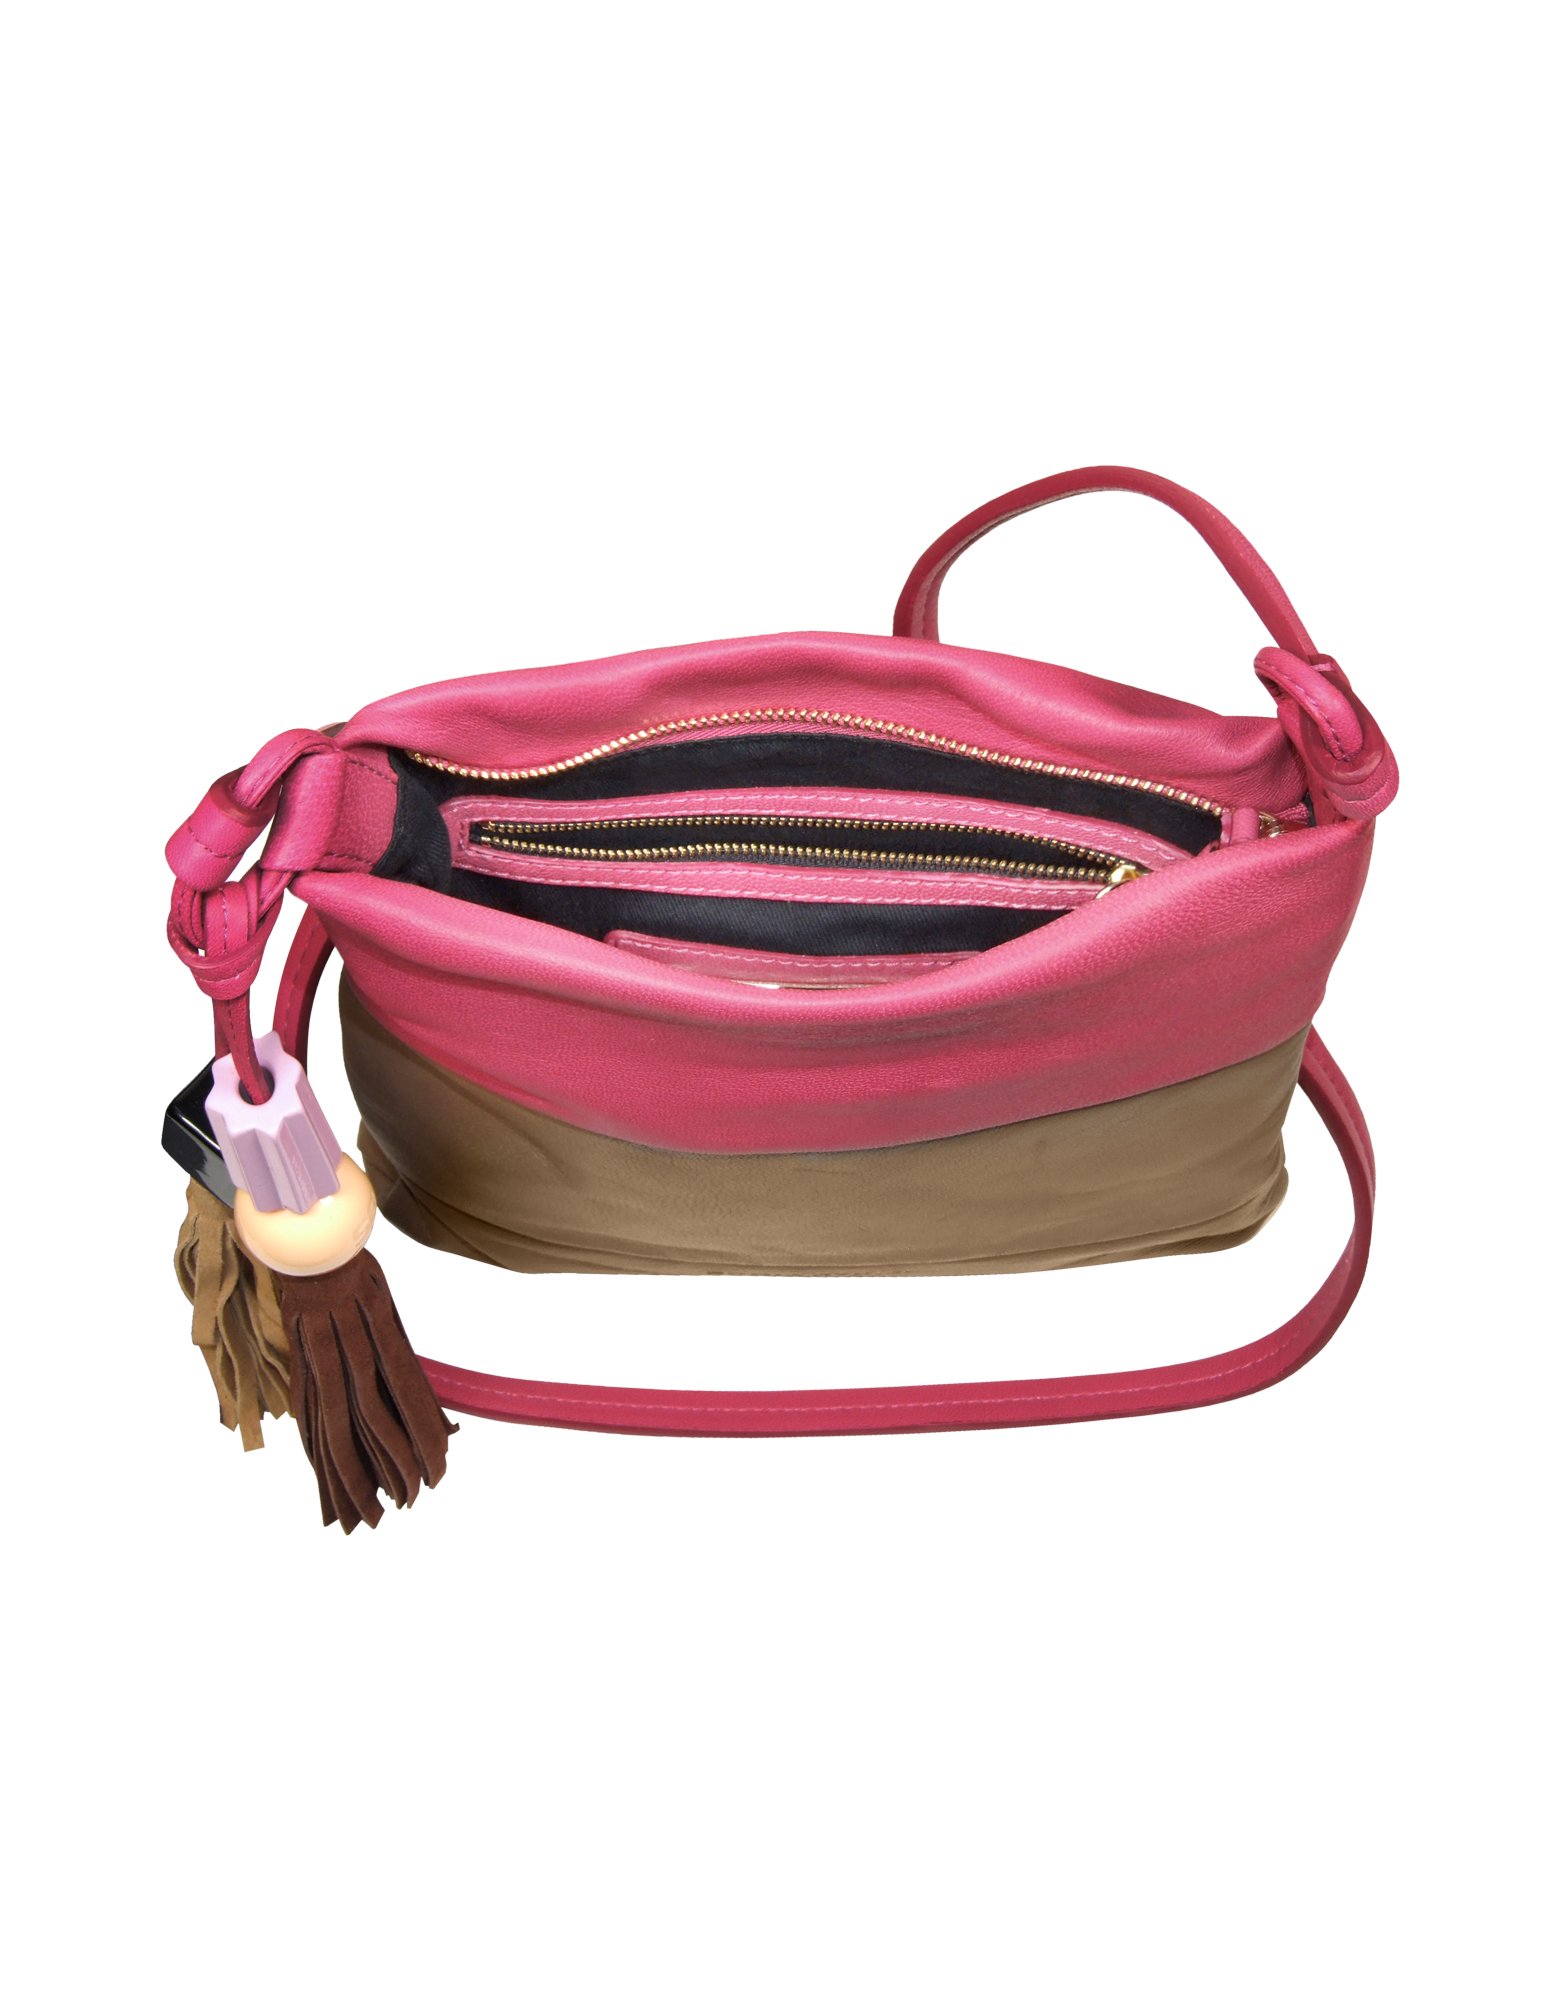 Sonia rykiel Besace Embellished Acetate Shoulder Bag in Pink | Lyst